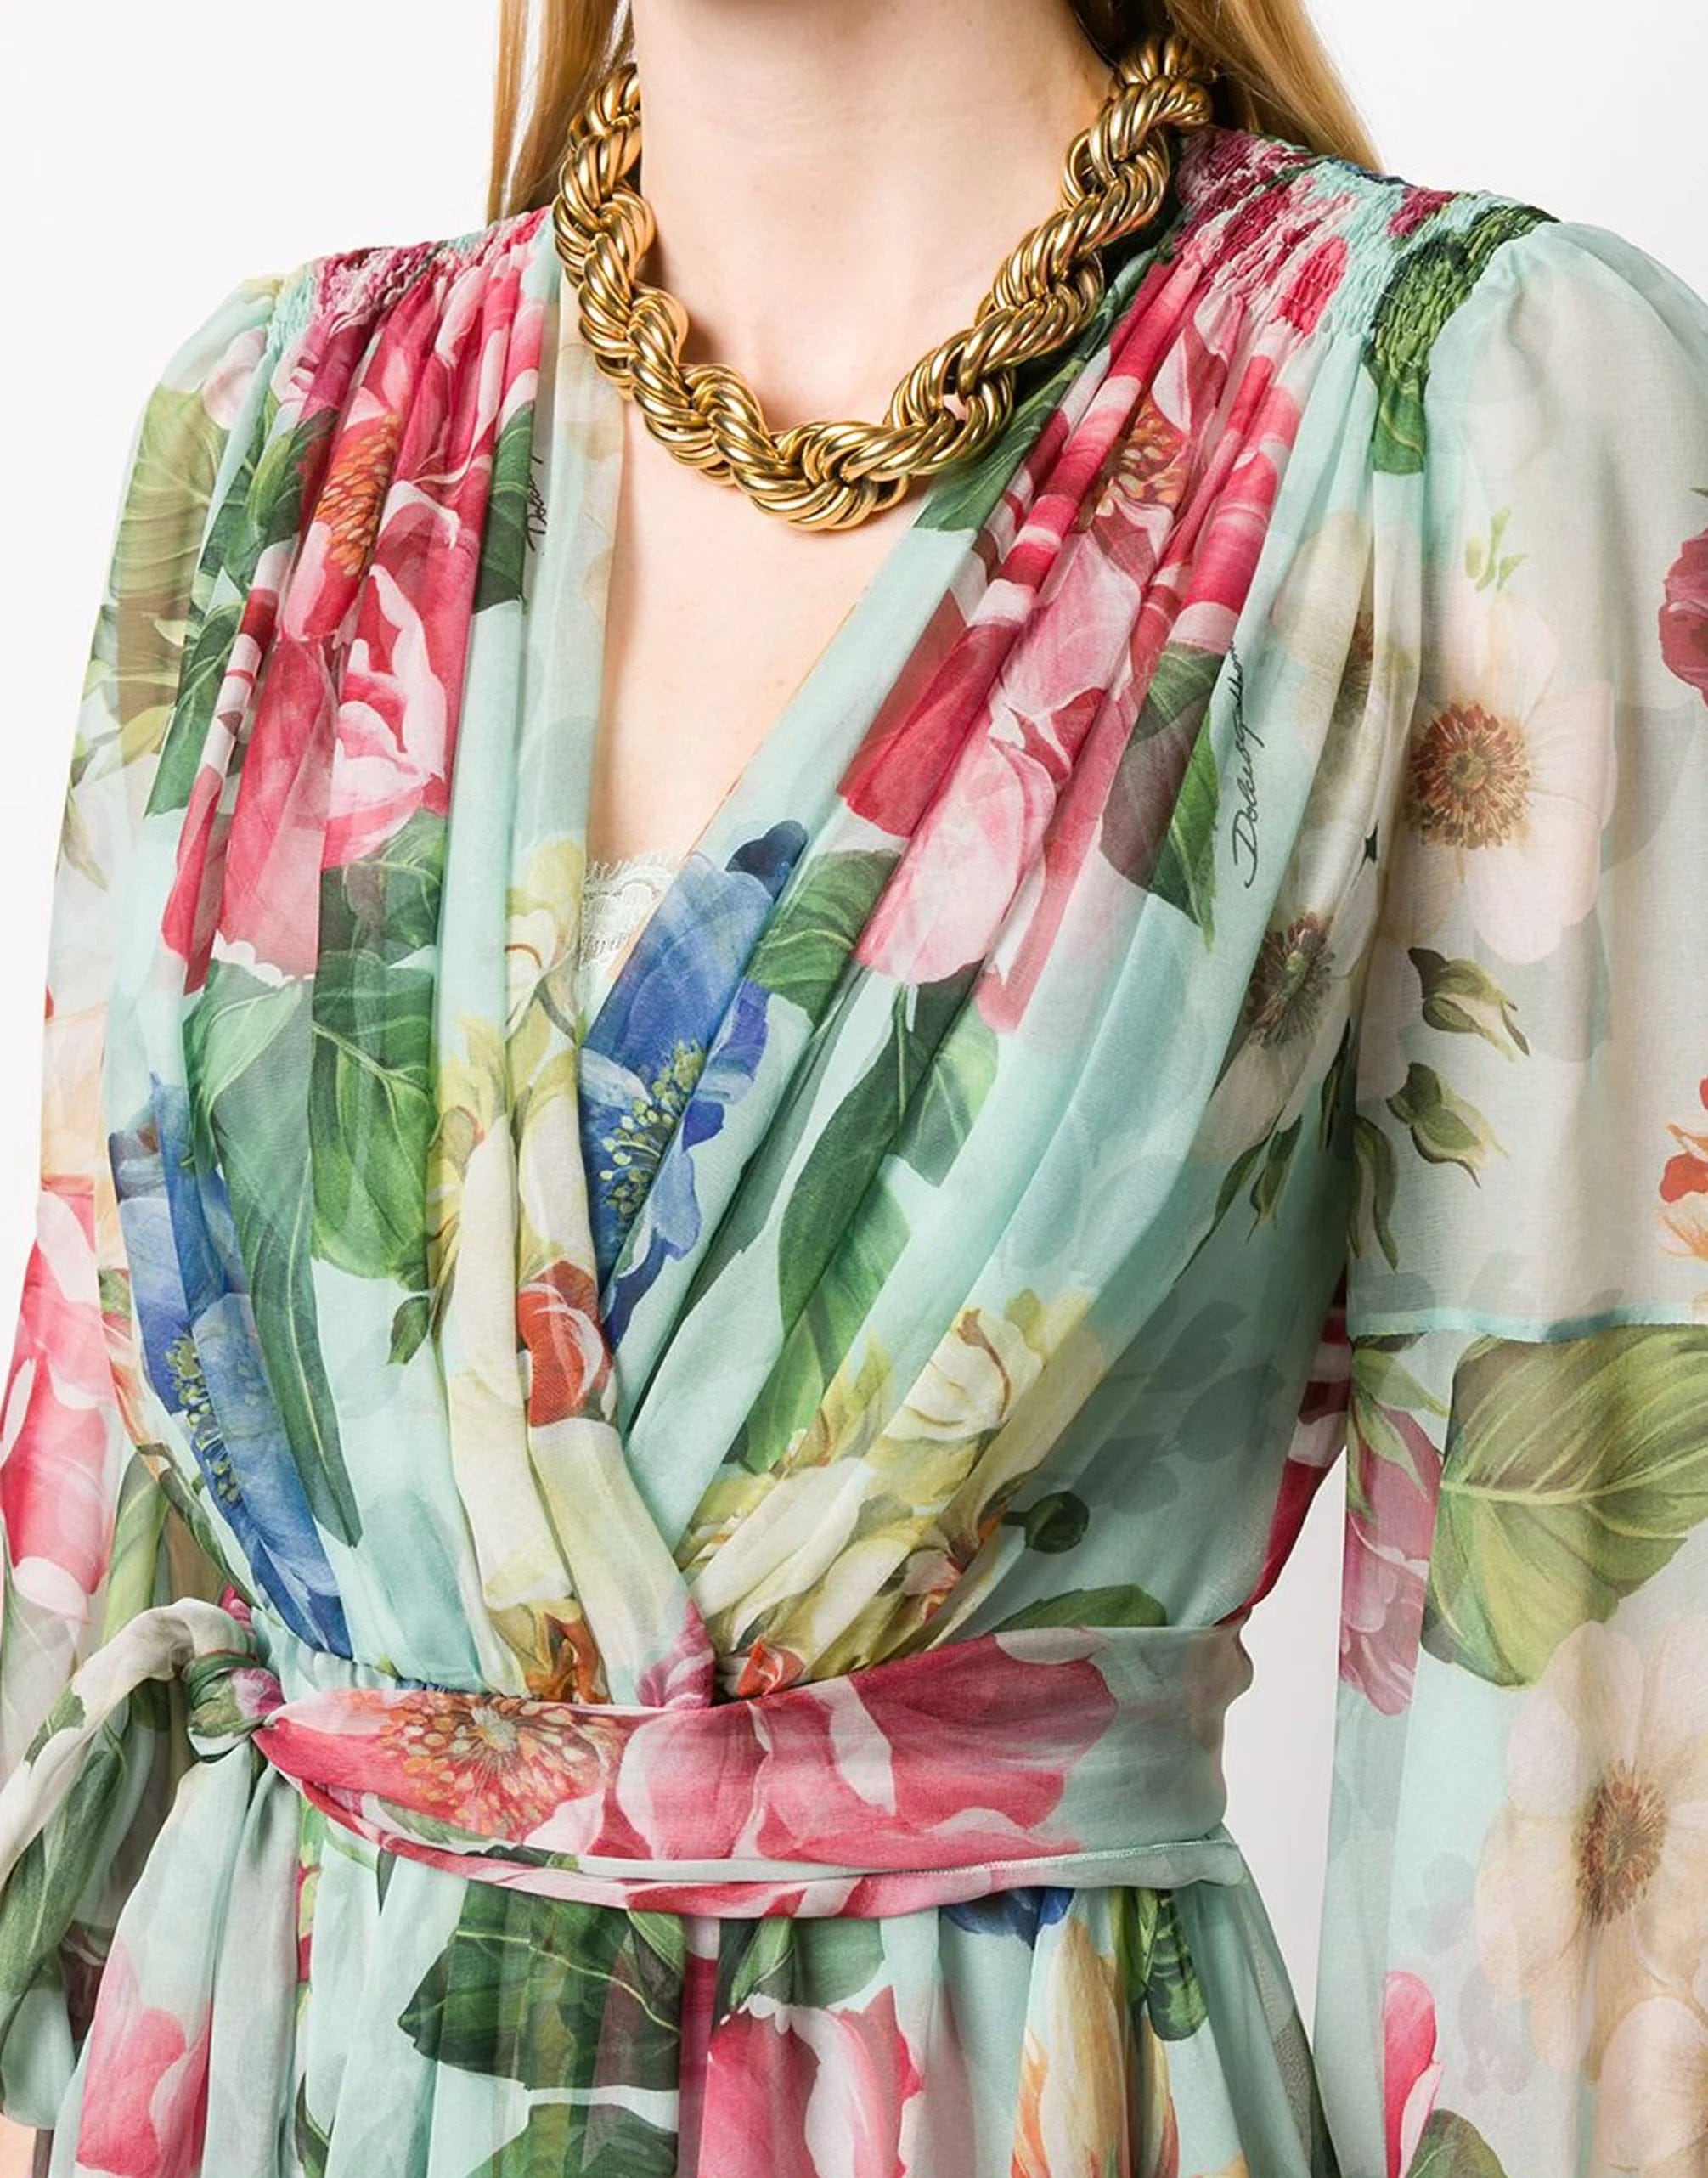 Dolce & Gabbana Floral Print Flaral Print Flared Dress2